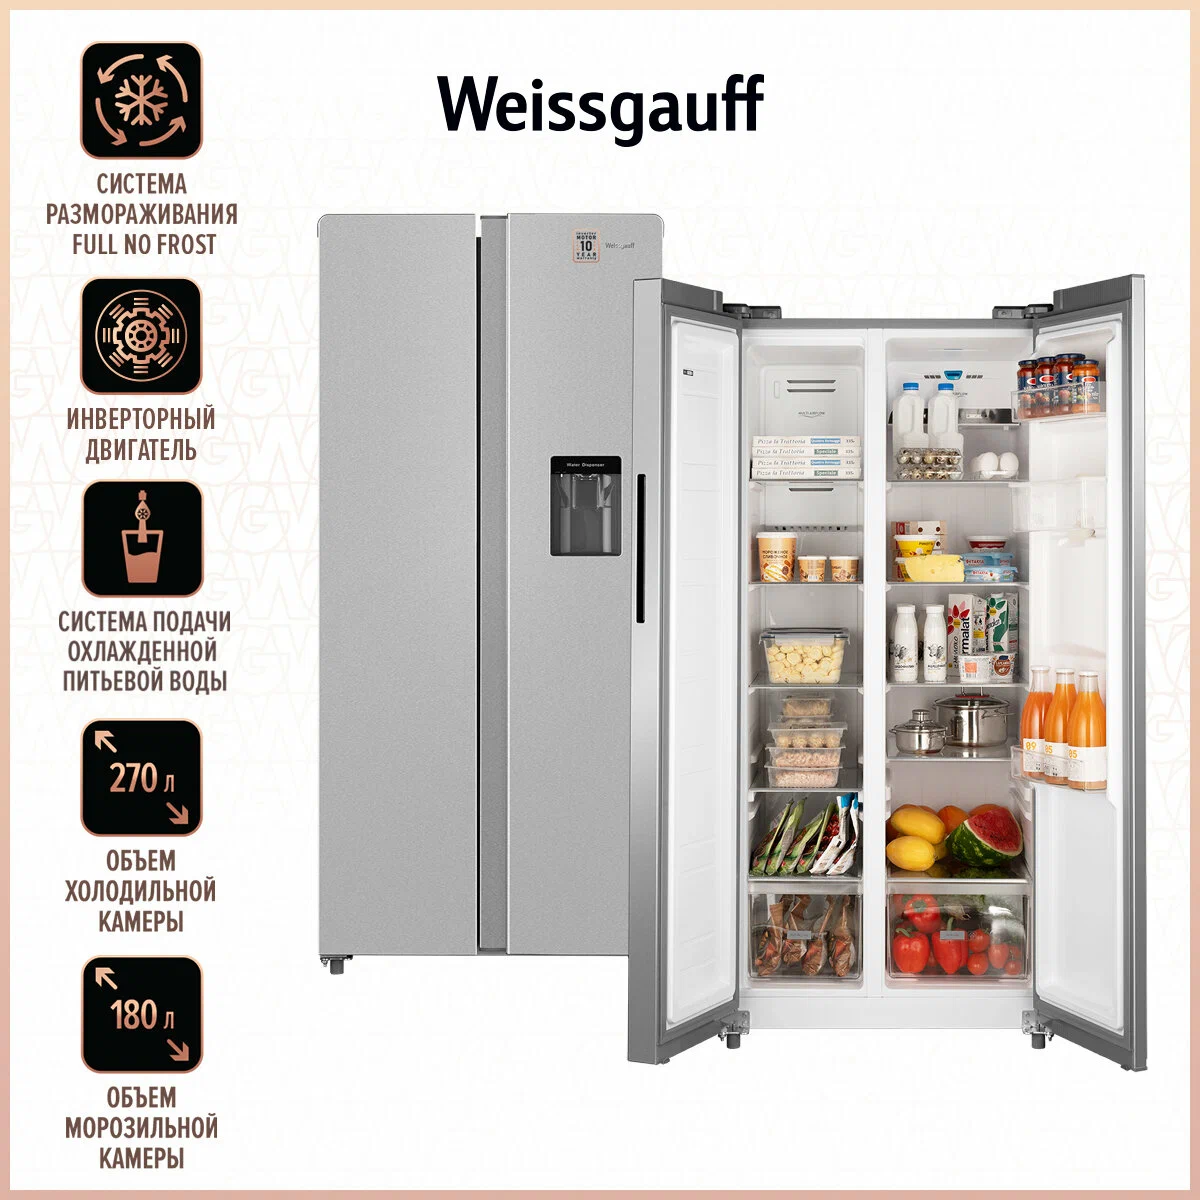 Холодильник Weissgauff WSBS 600 X серебристый холодильник weissgauff wsbs 600 x серебристый